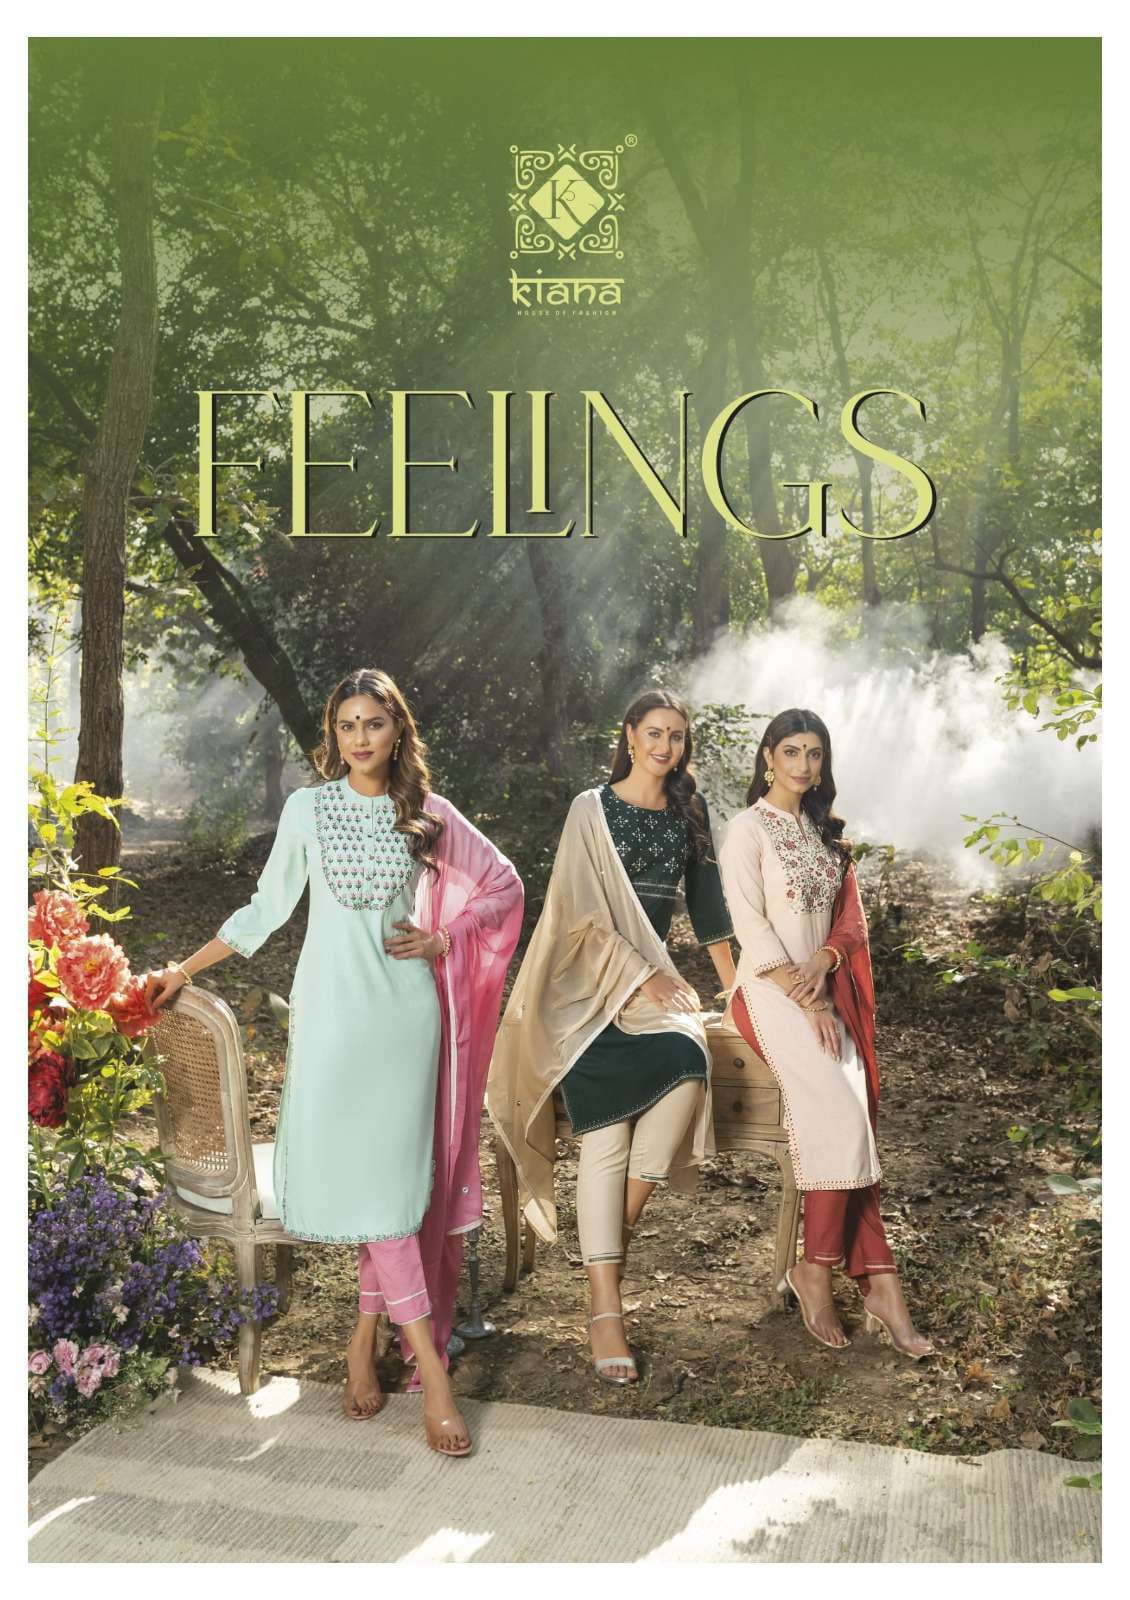 kiana feelings series 101-106 Bombay fabric readymade suit 